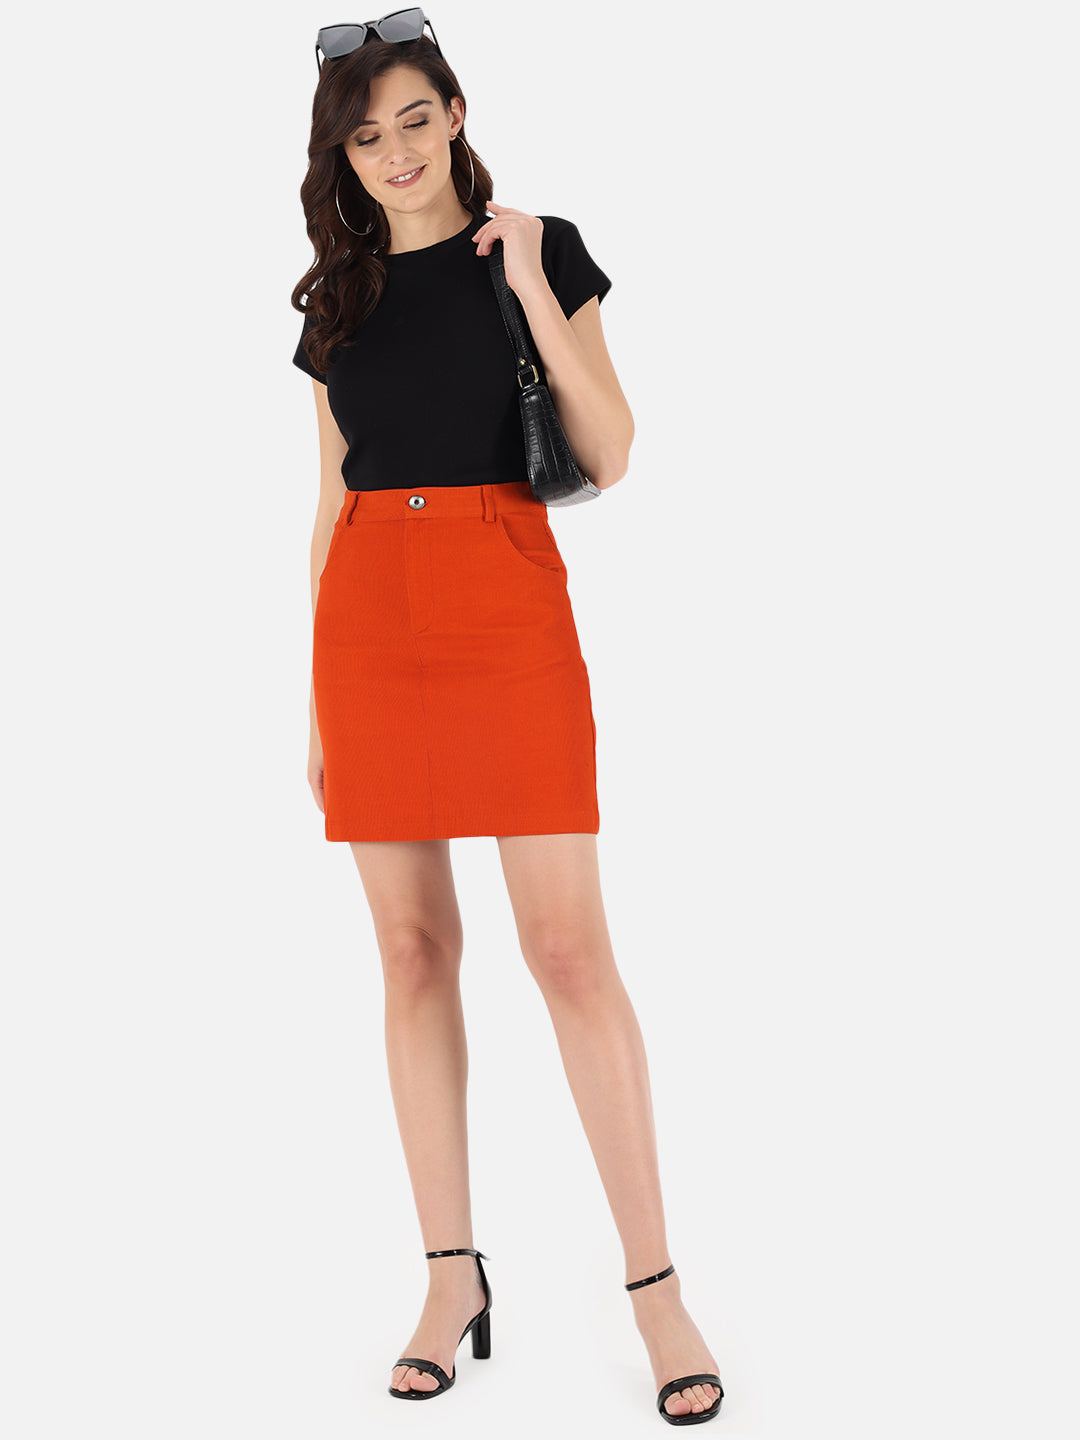 Classic Orange Skirt